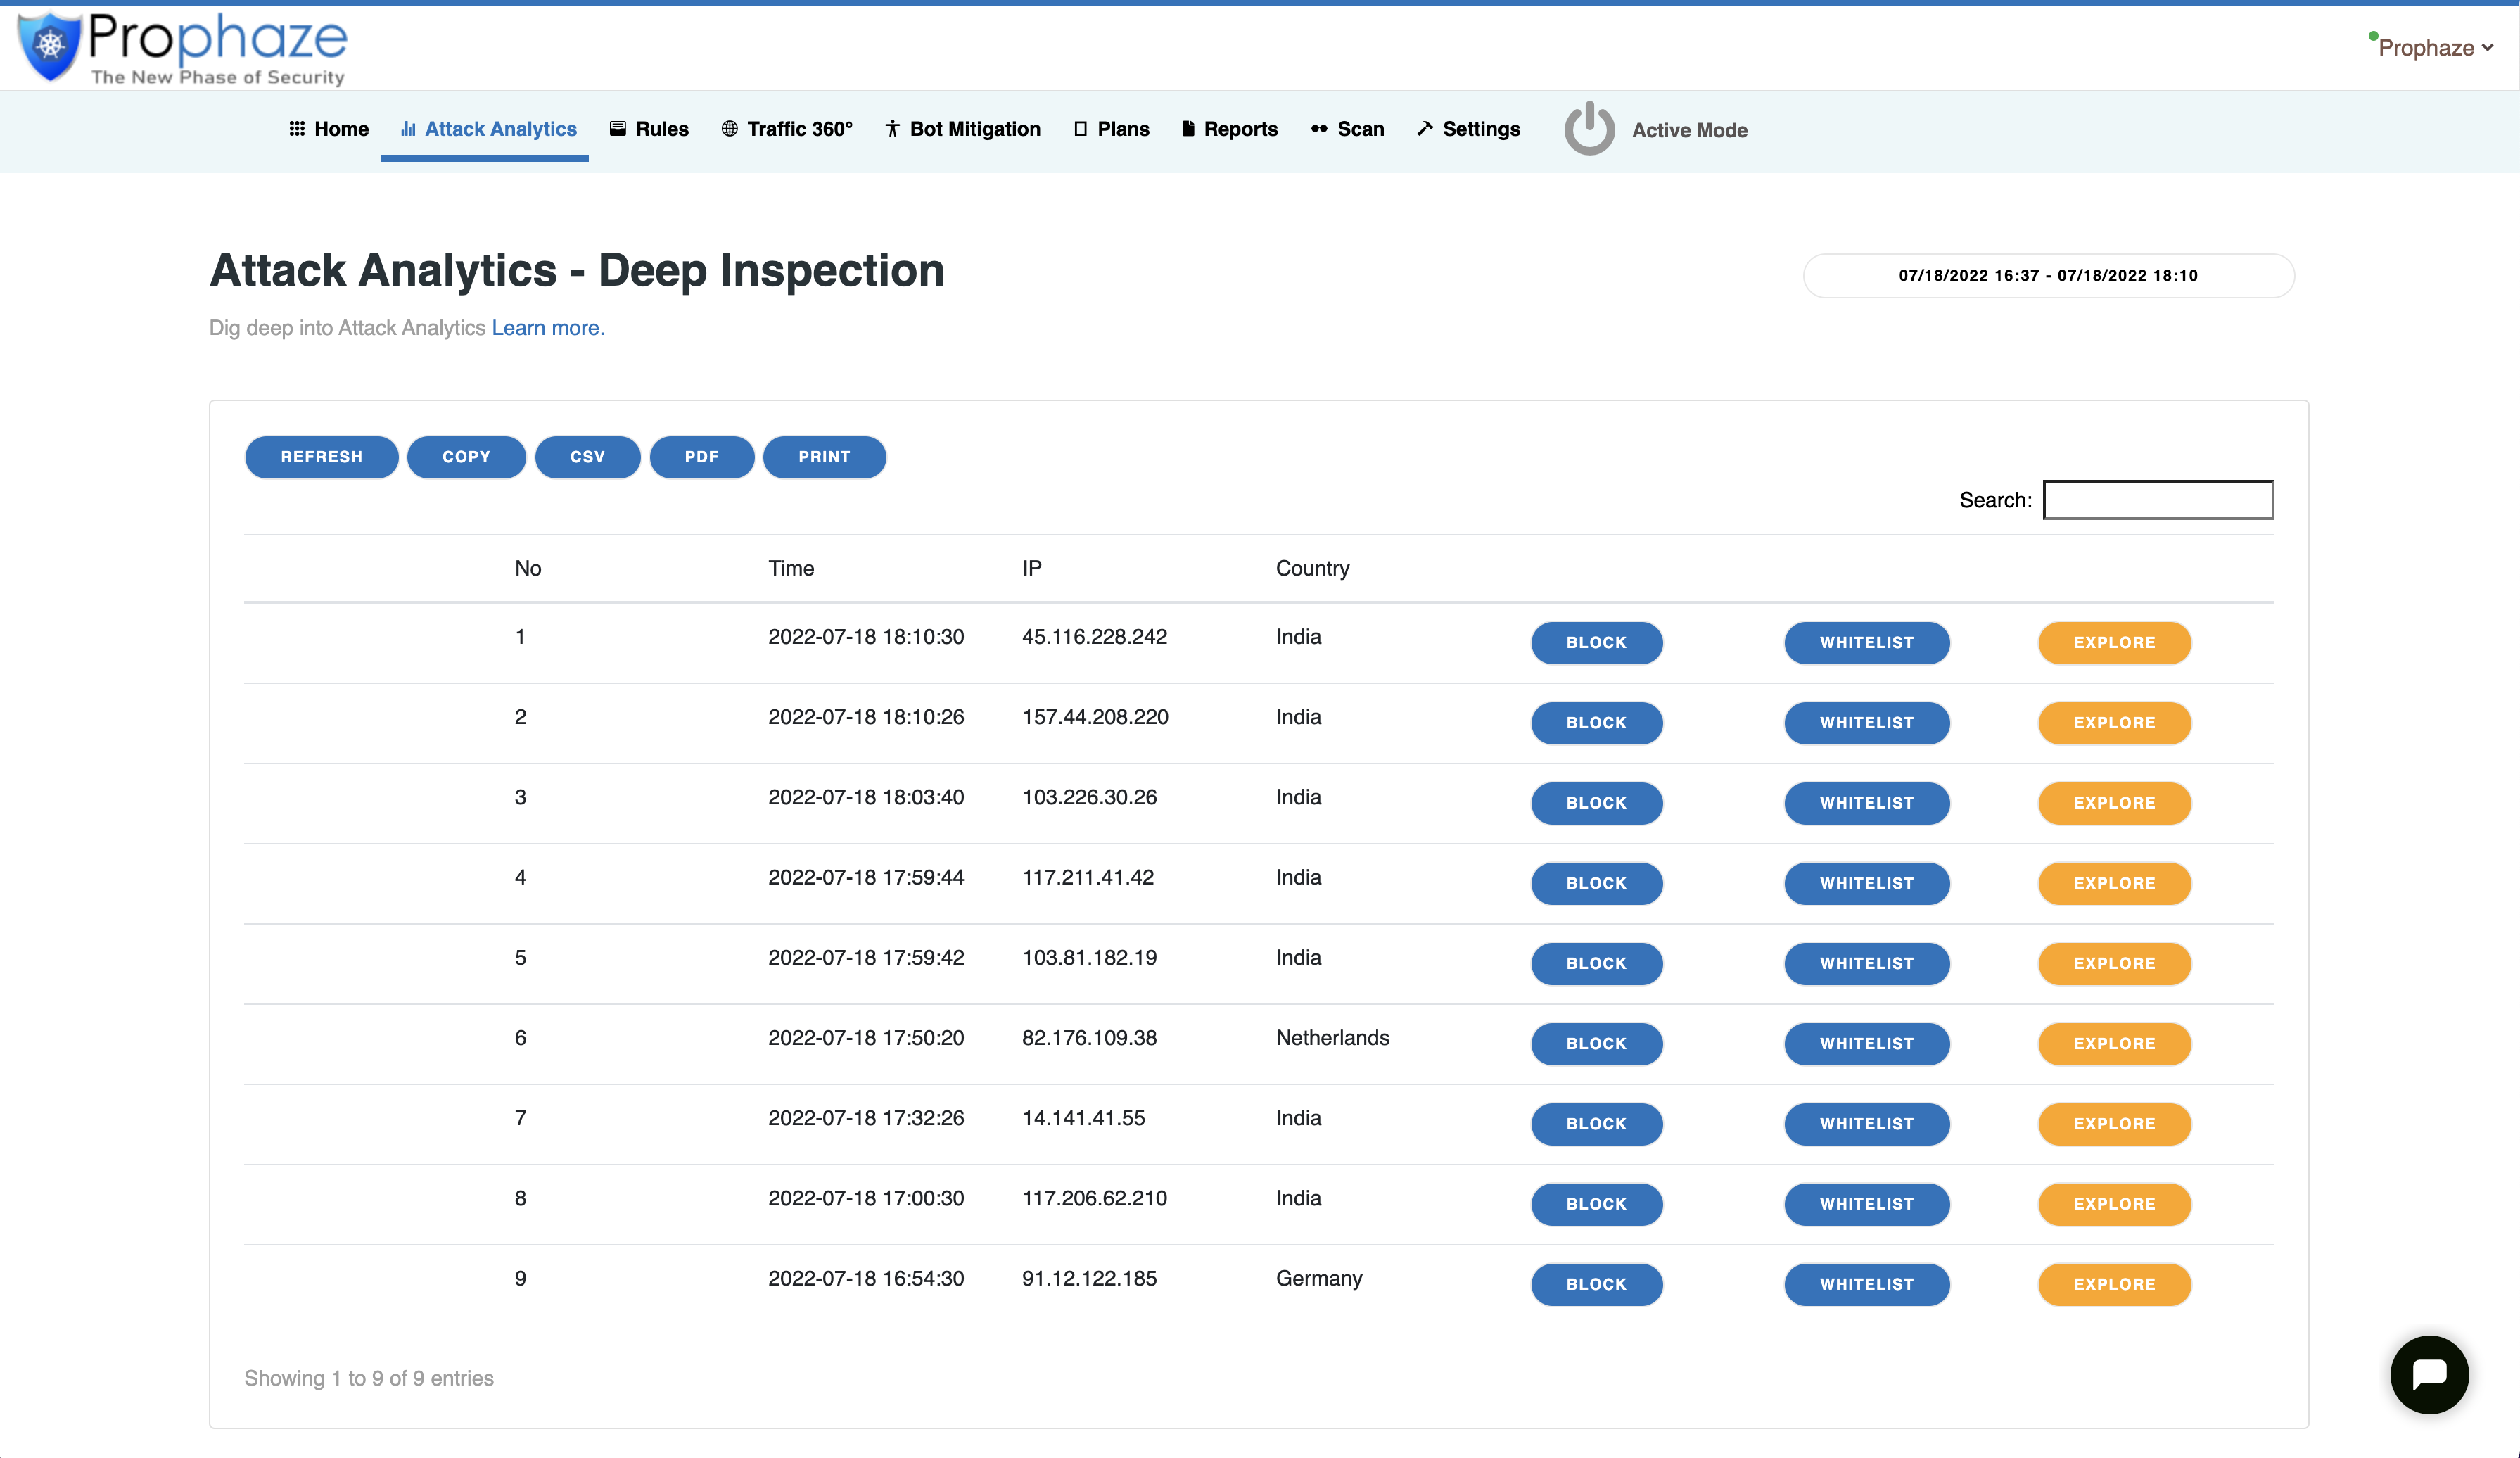 Attack Analytics - Deep Inspection - Prophaze WAF